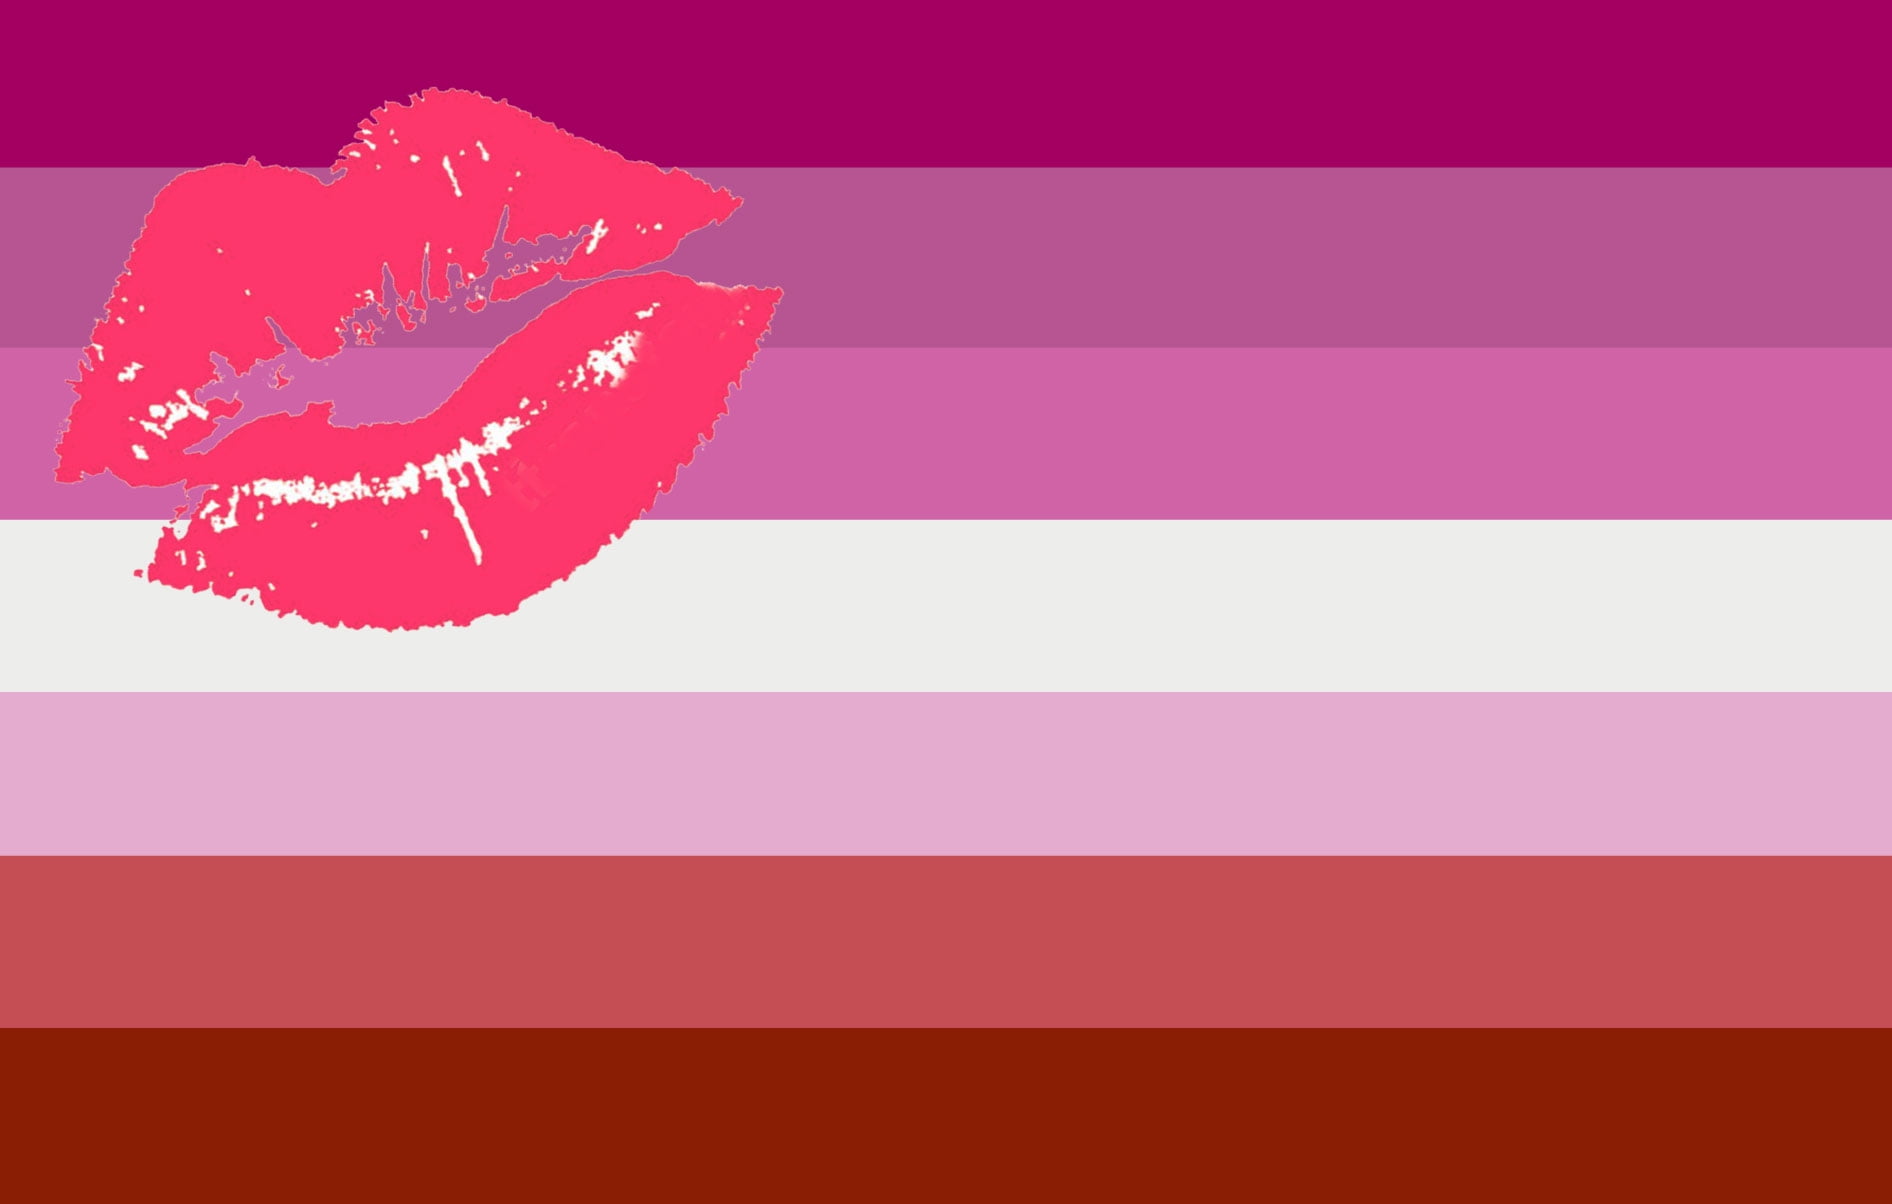 Lesbian Lipstick Rainbow Pride Plain 100D Woven Poly Nylon 3x5 3'x5' Flag Banner 